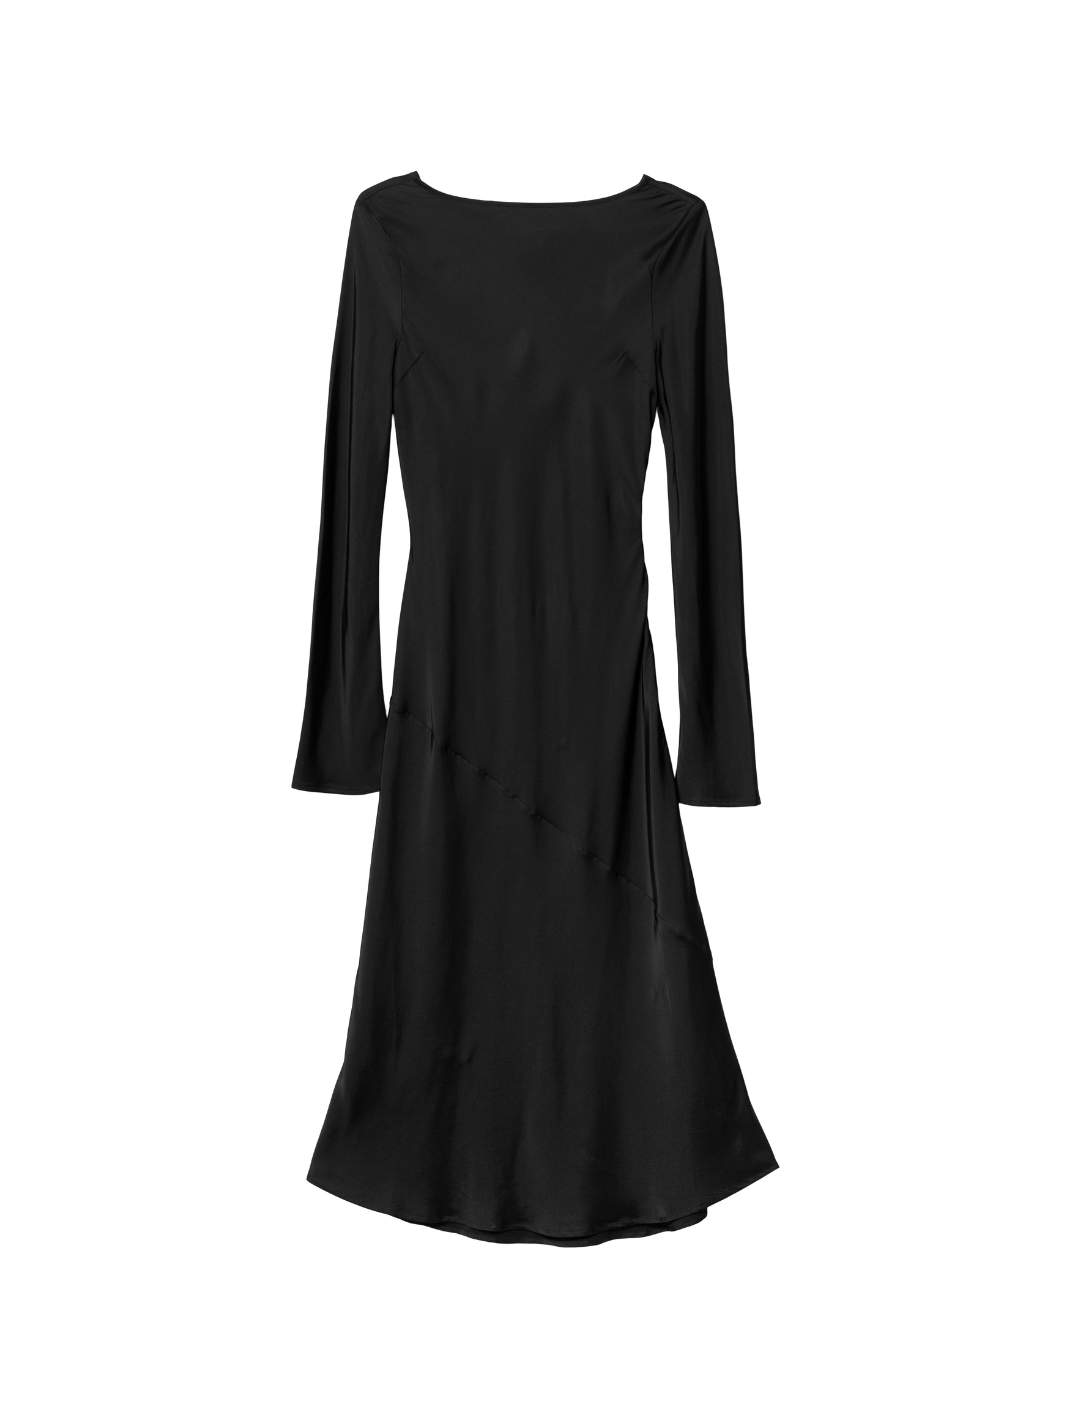 Fall Winter Spring Summer Dresses Kjole | Longsleeve Bias Cut Slip Dress Black Jet Black